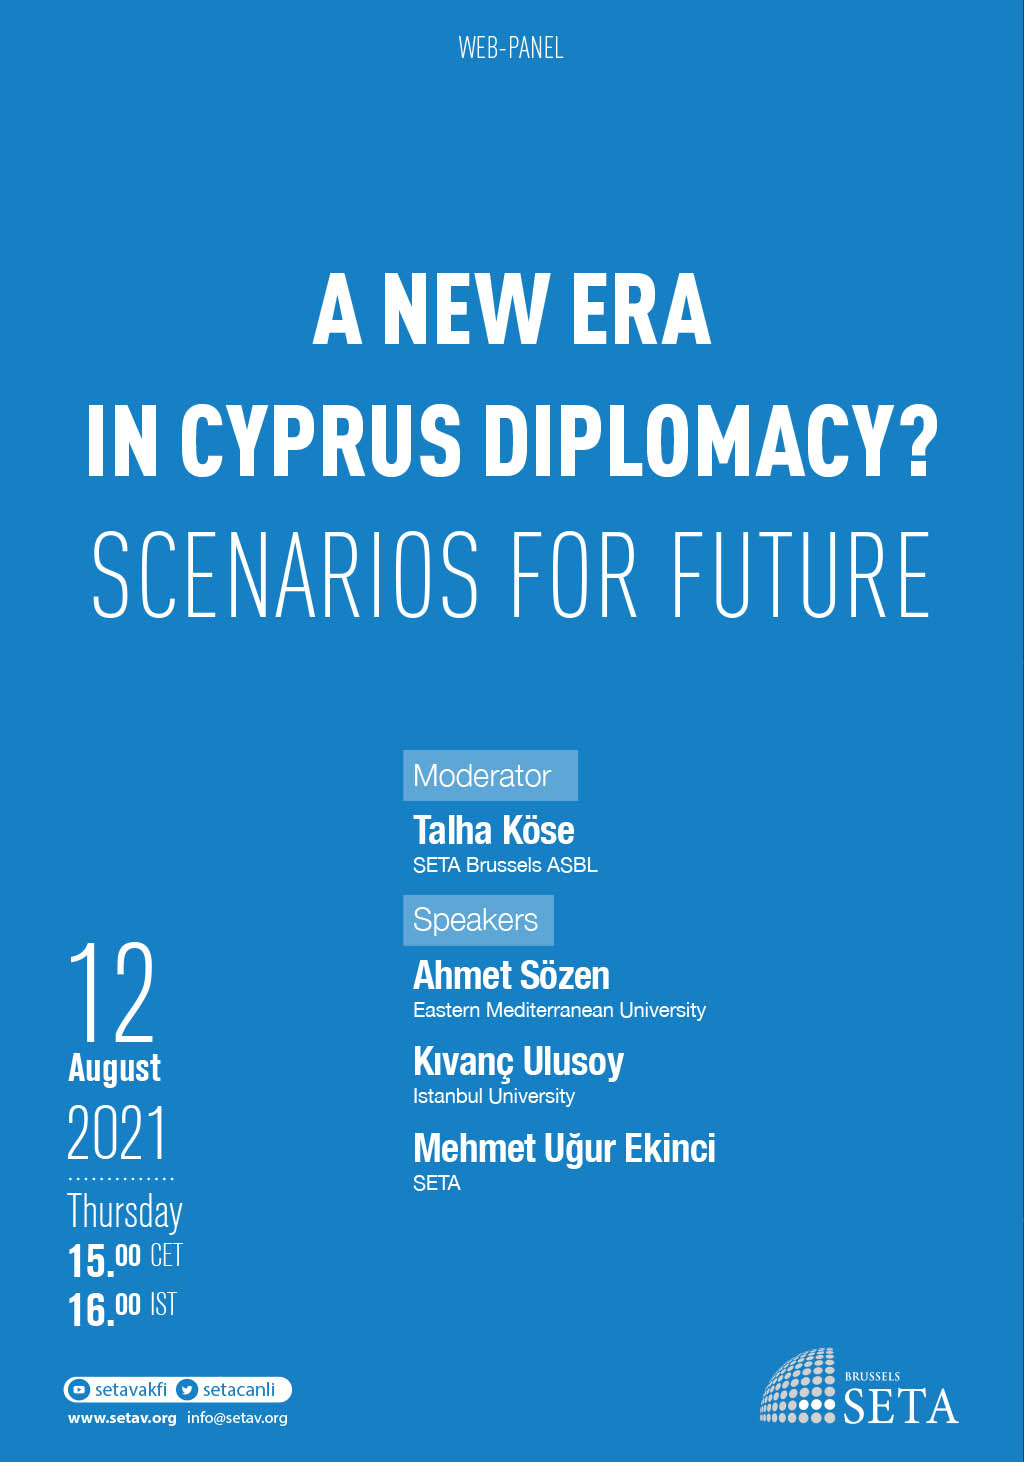 A New Era in Cyprus Diplomacy Scenarios for Future